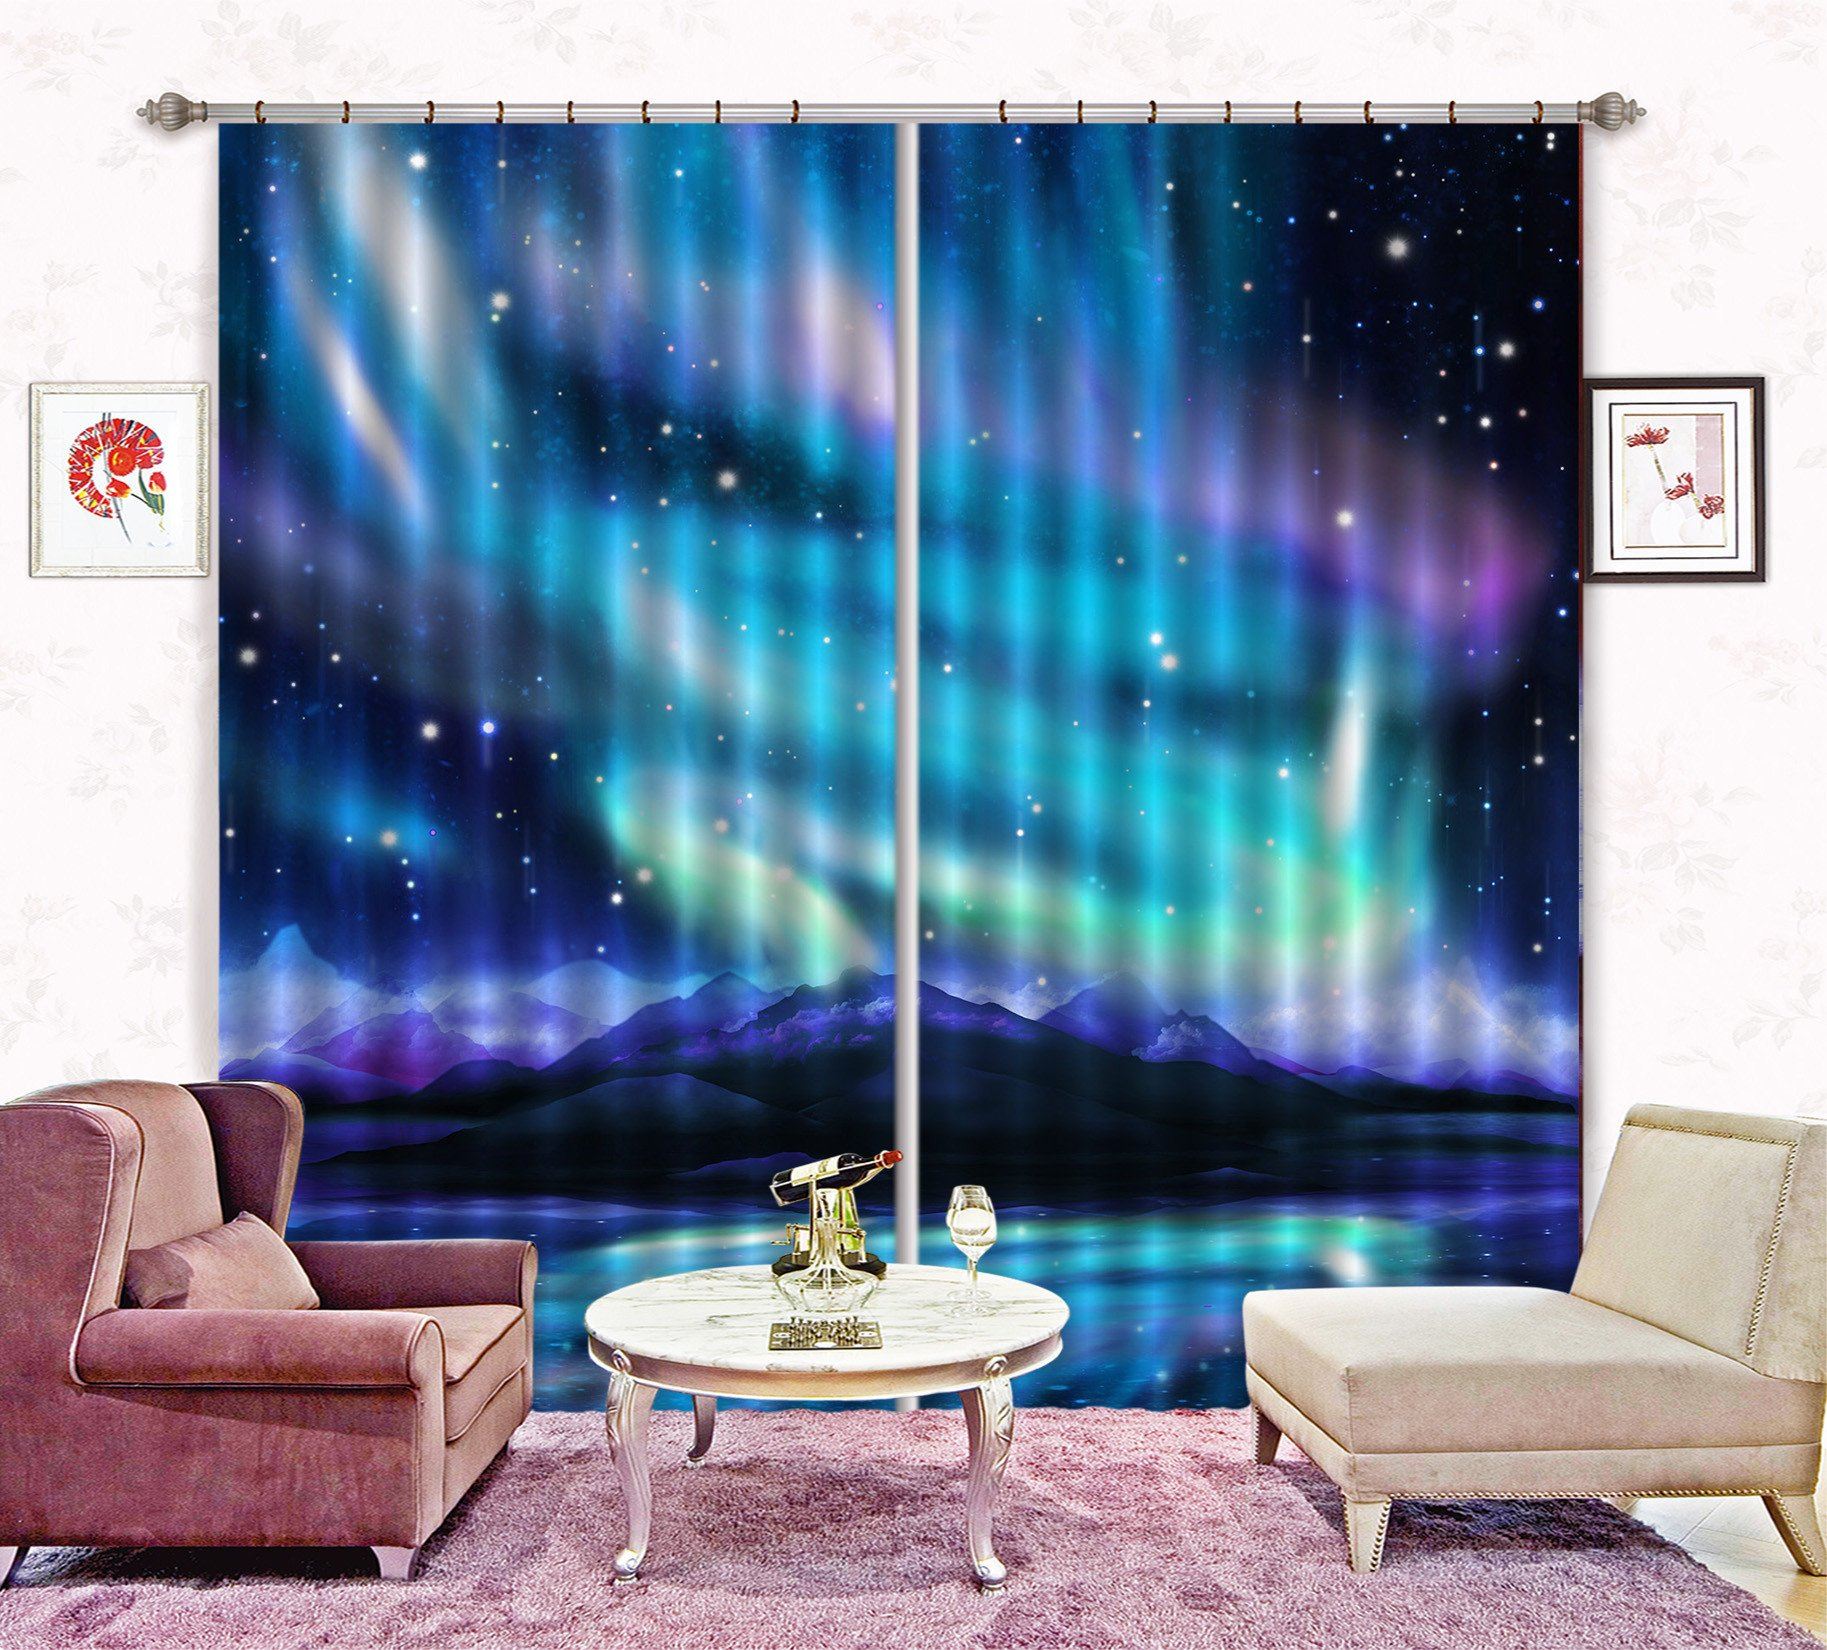 3D Dazzling Aurora Curtains Drapes Wallpaper AJ Wallpaper 